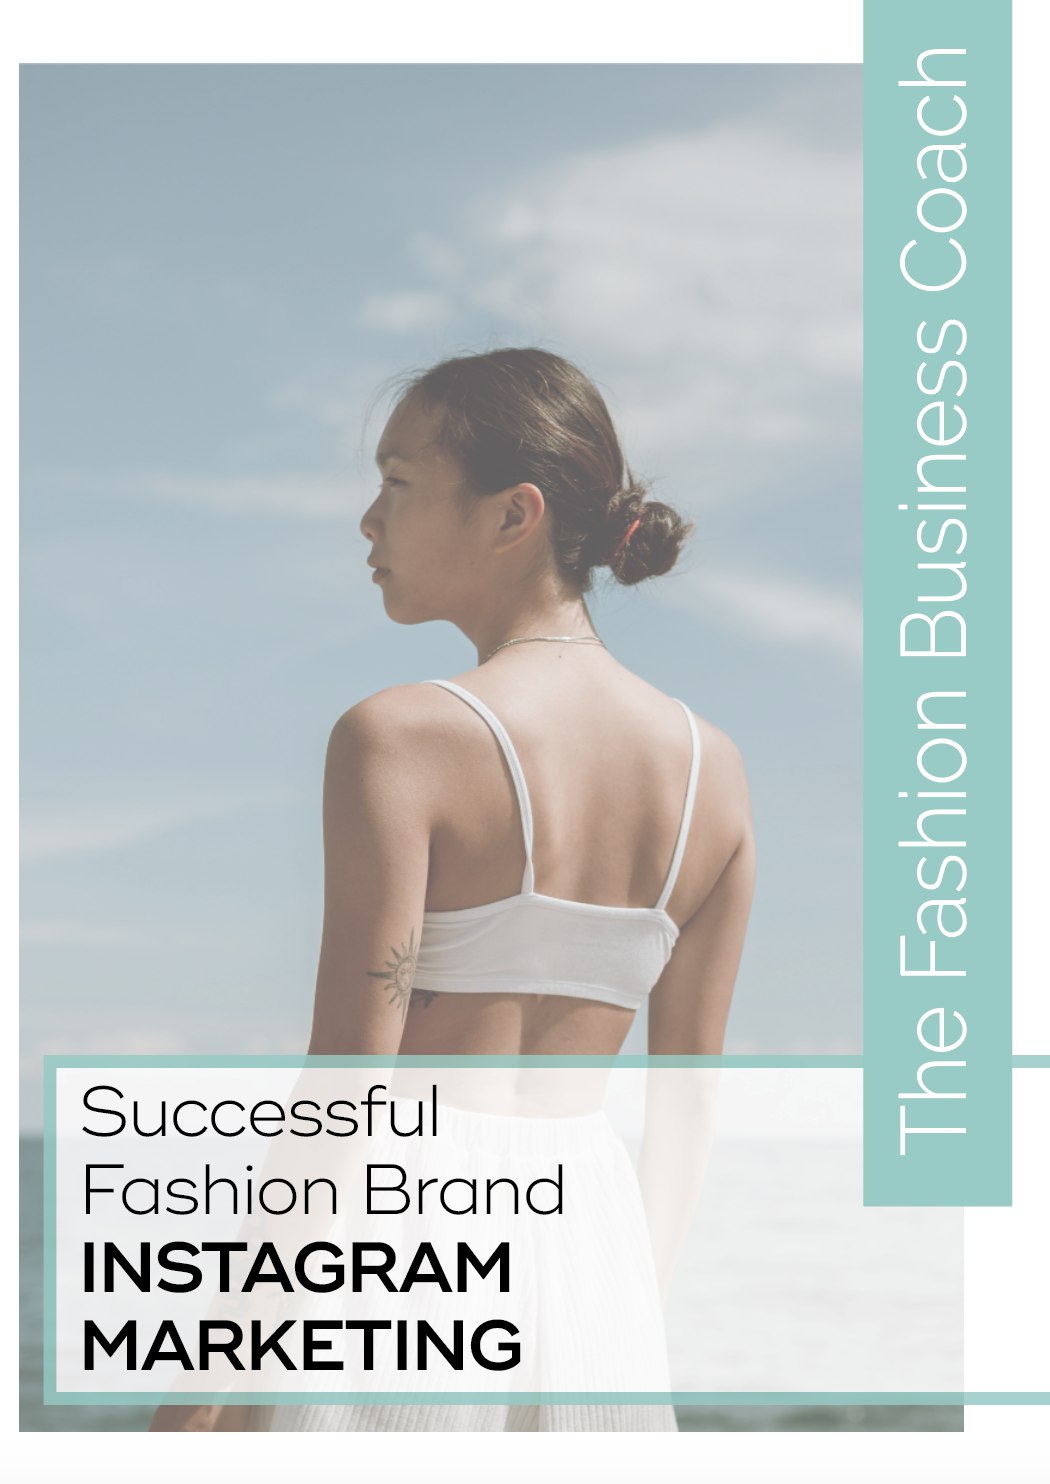 Instagram Marketing – Successful Fashion Brand 1.png